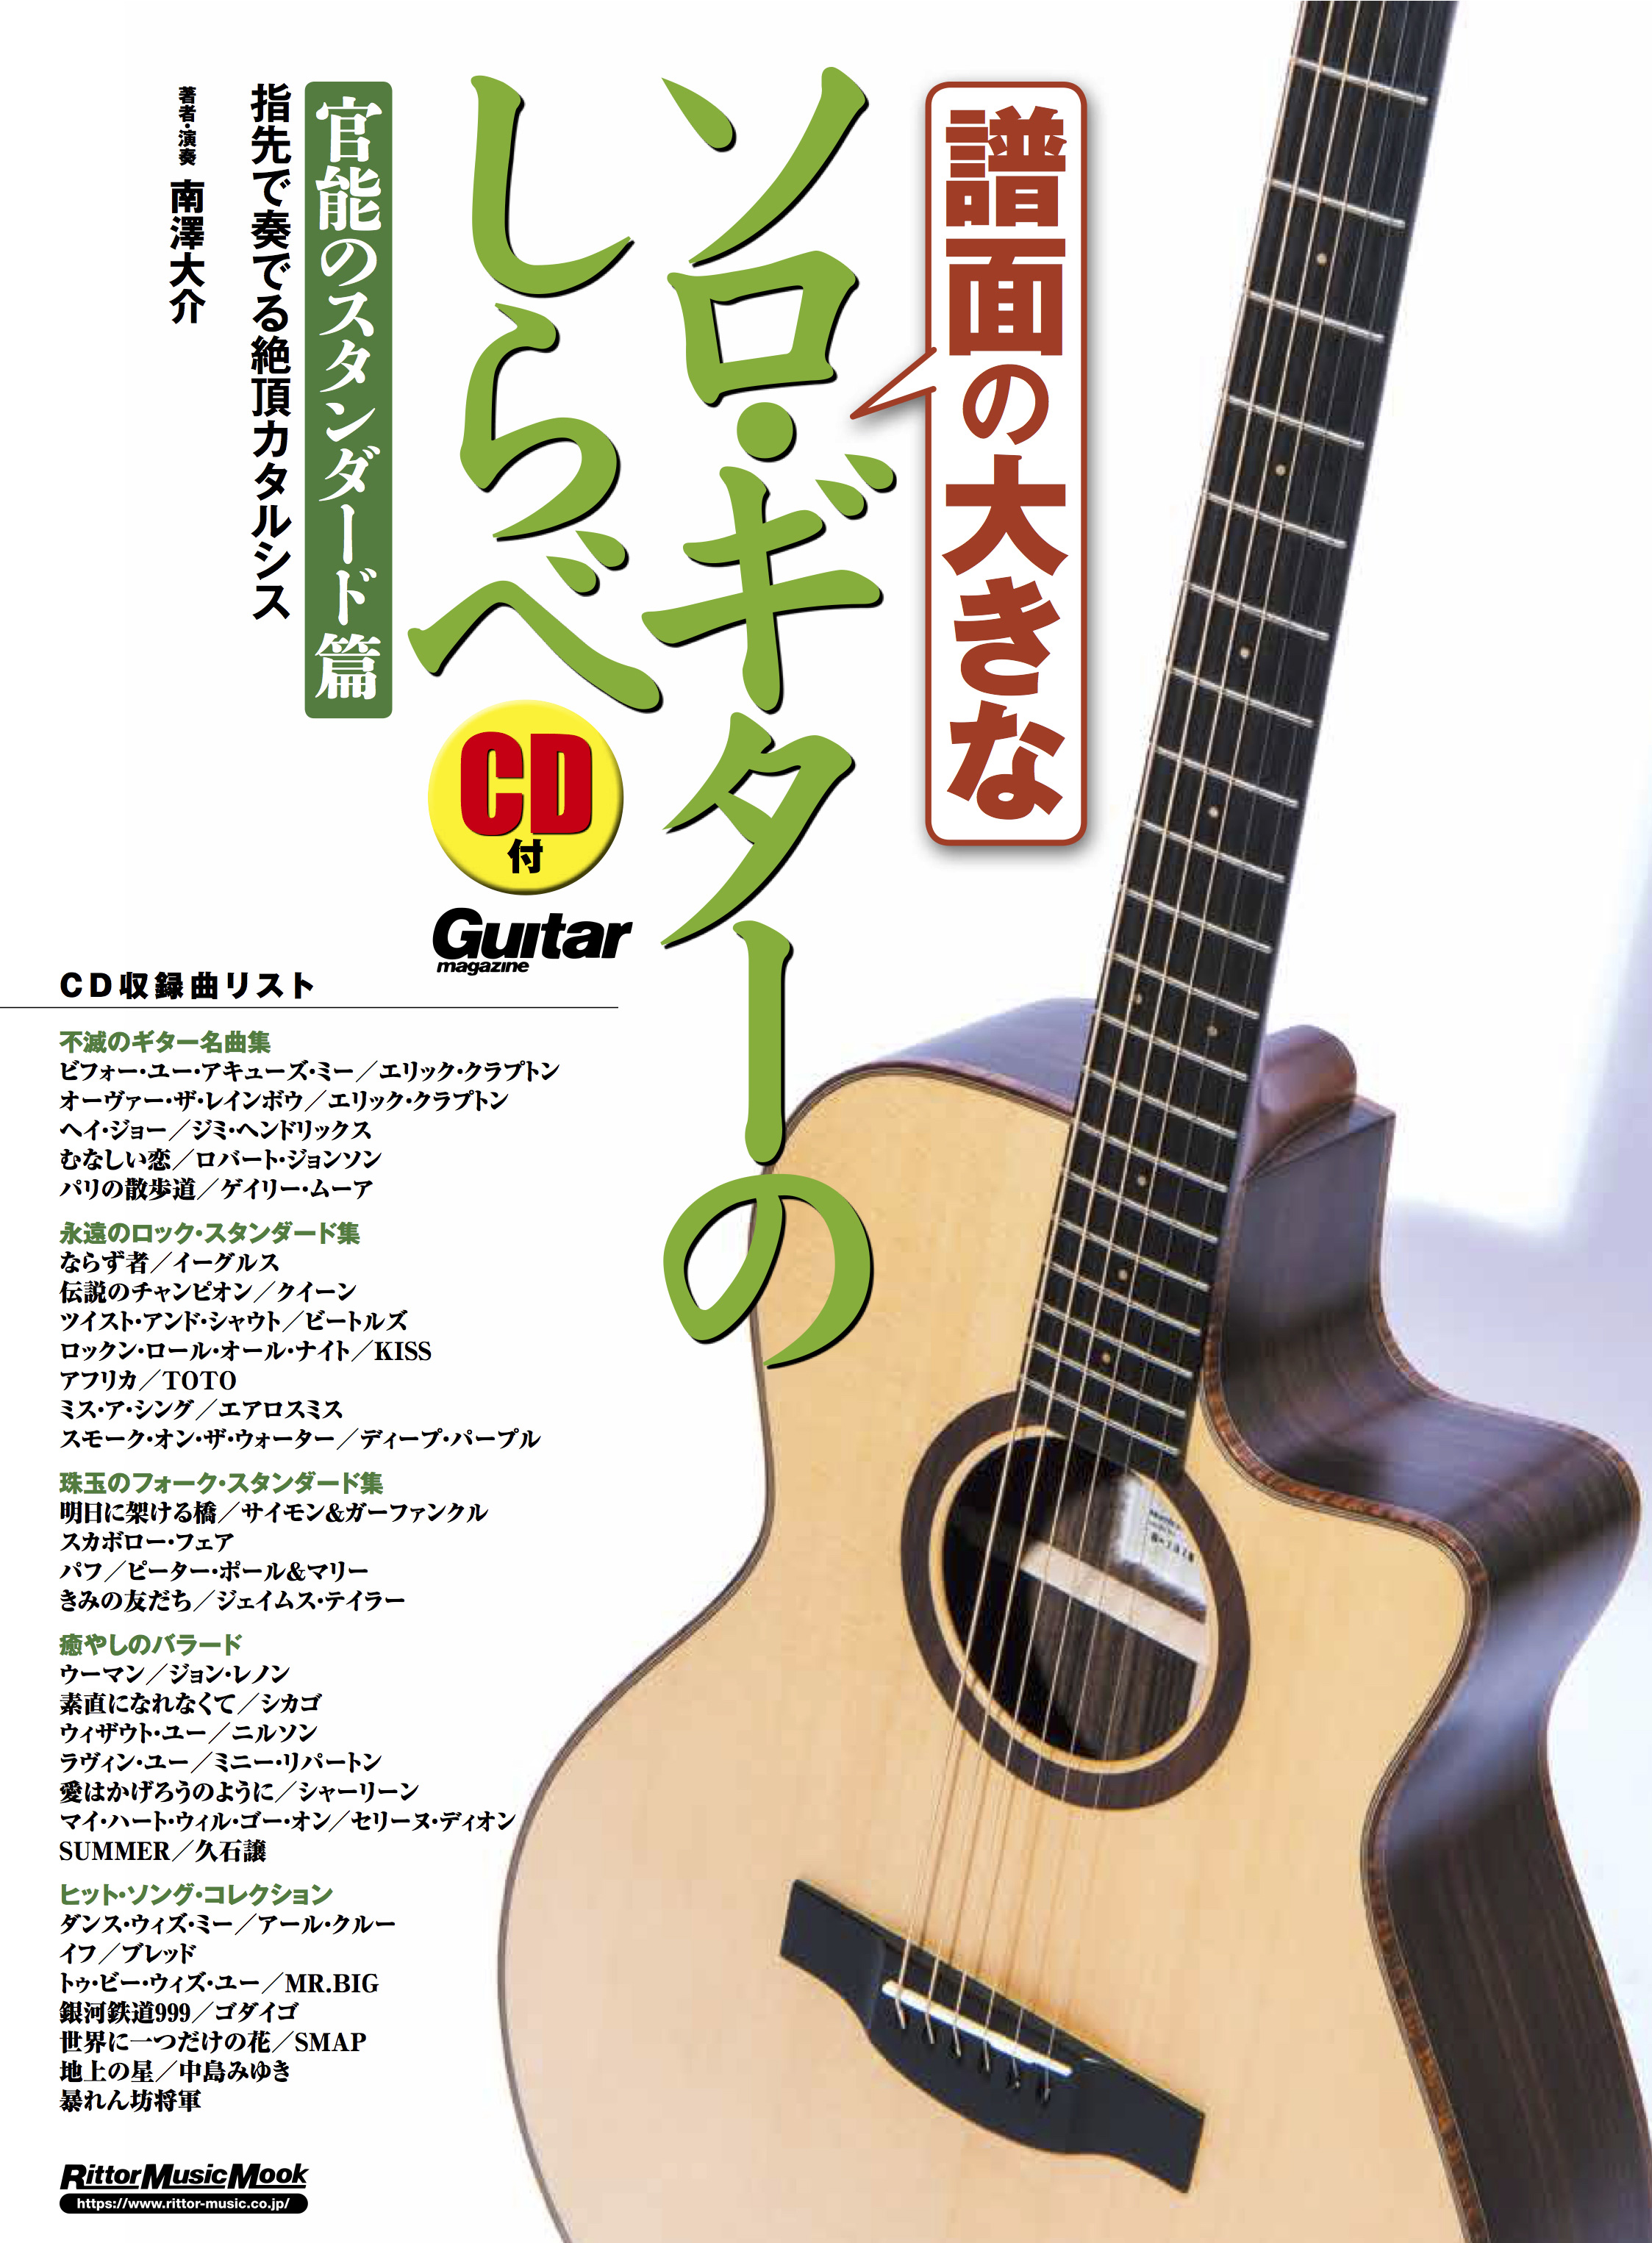 John Lennon - Woman (Solo Guitar) Sheets by Daisuke Minamizawa